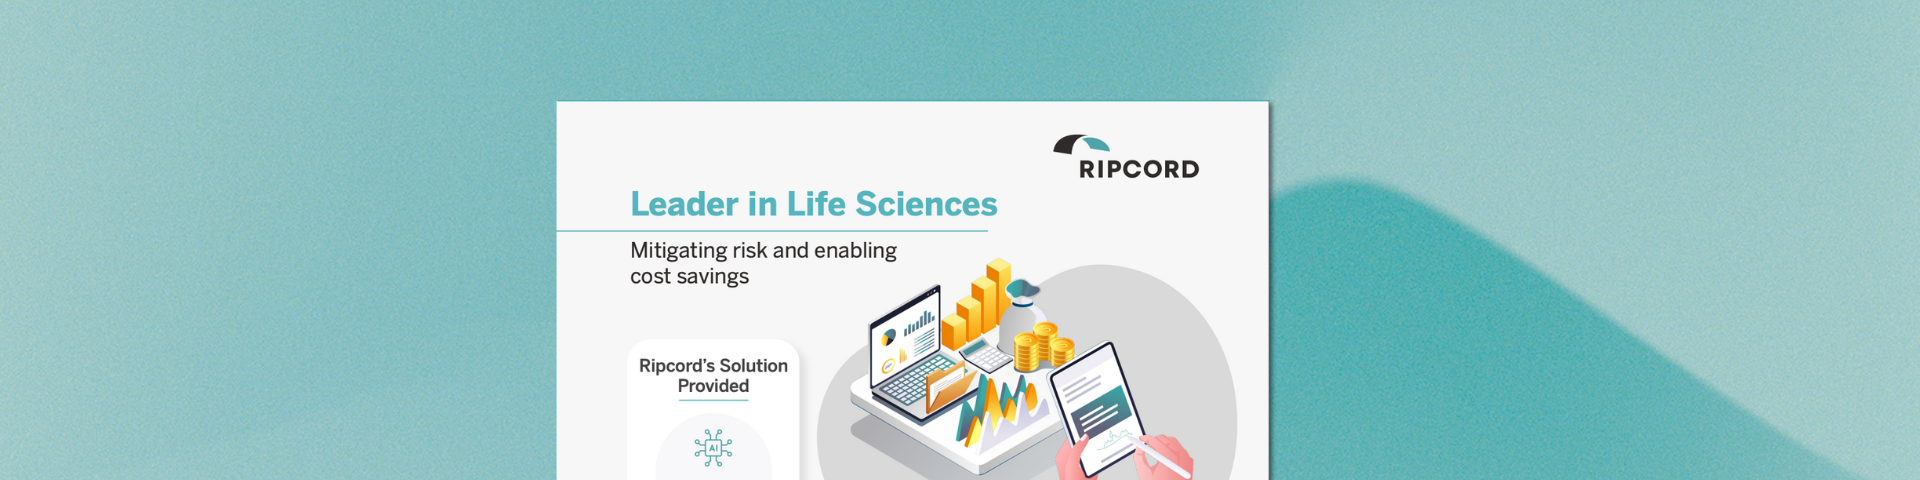 Life Sciences Case Study - Ripcord